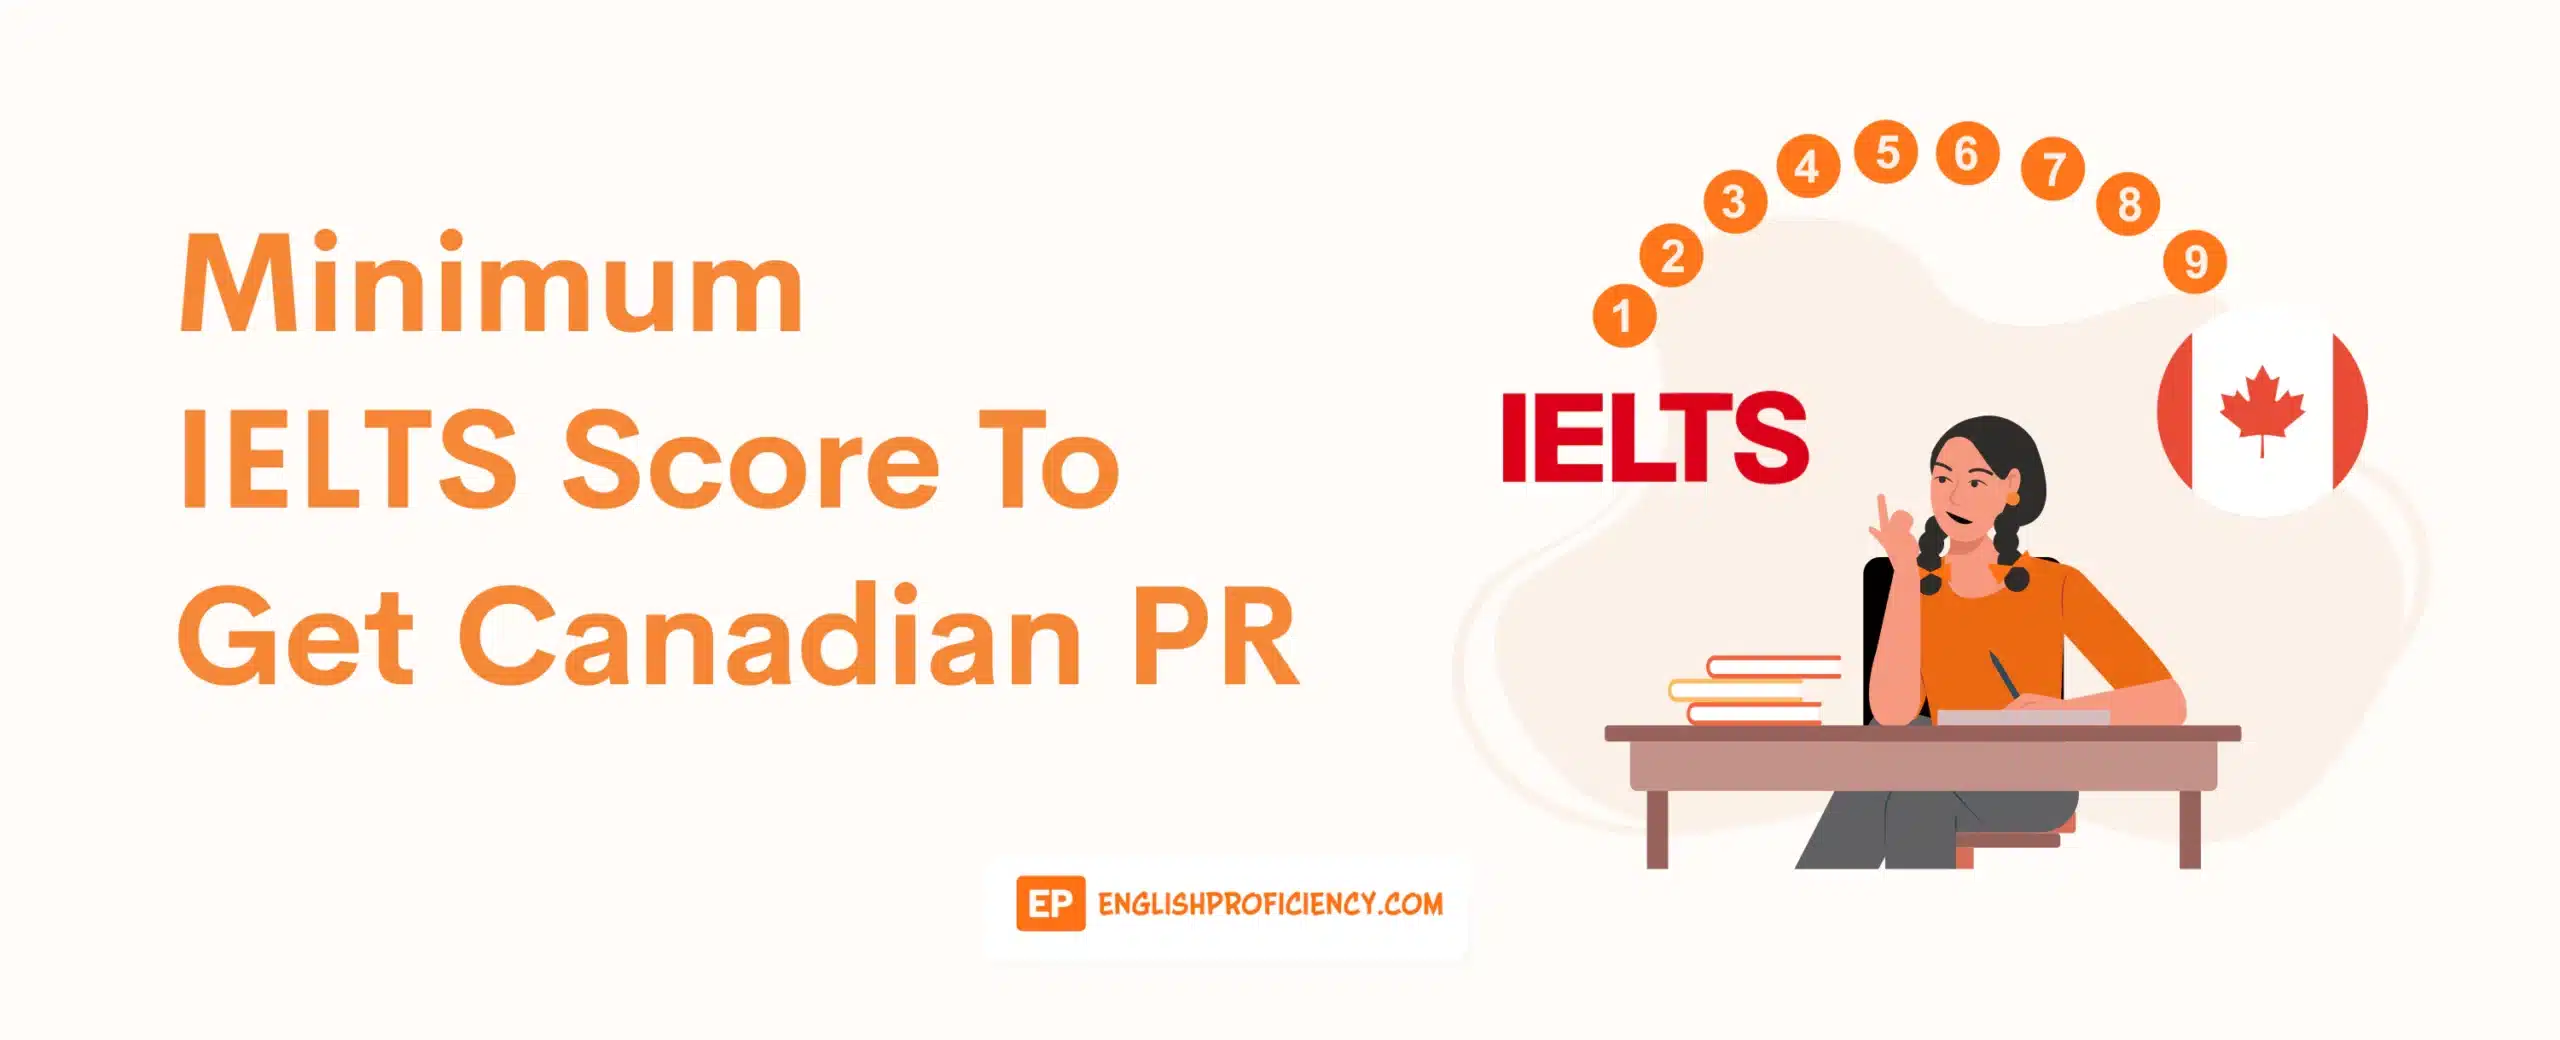 Minimum IELTS Score To Get Canadian PR